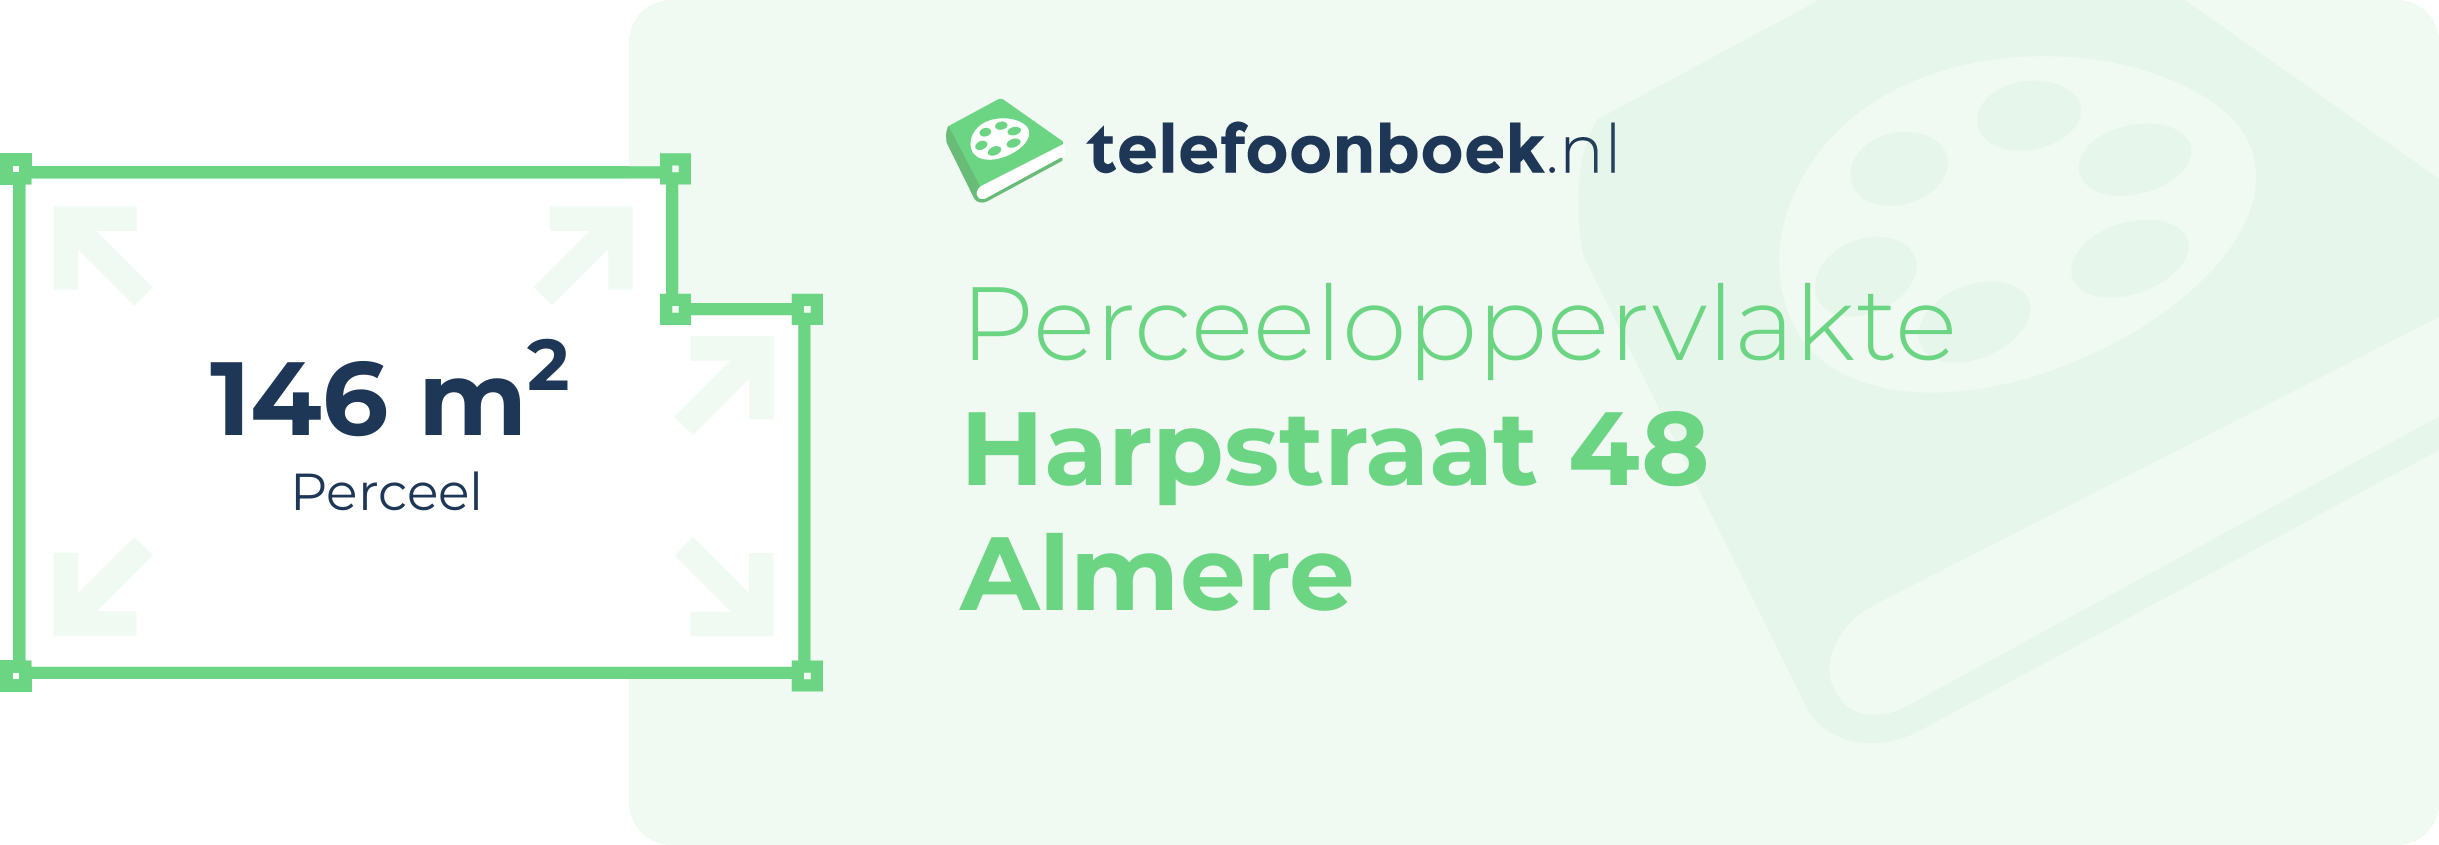 Perceeloppervlakte Harpstraat 48 Almere